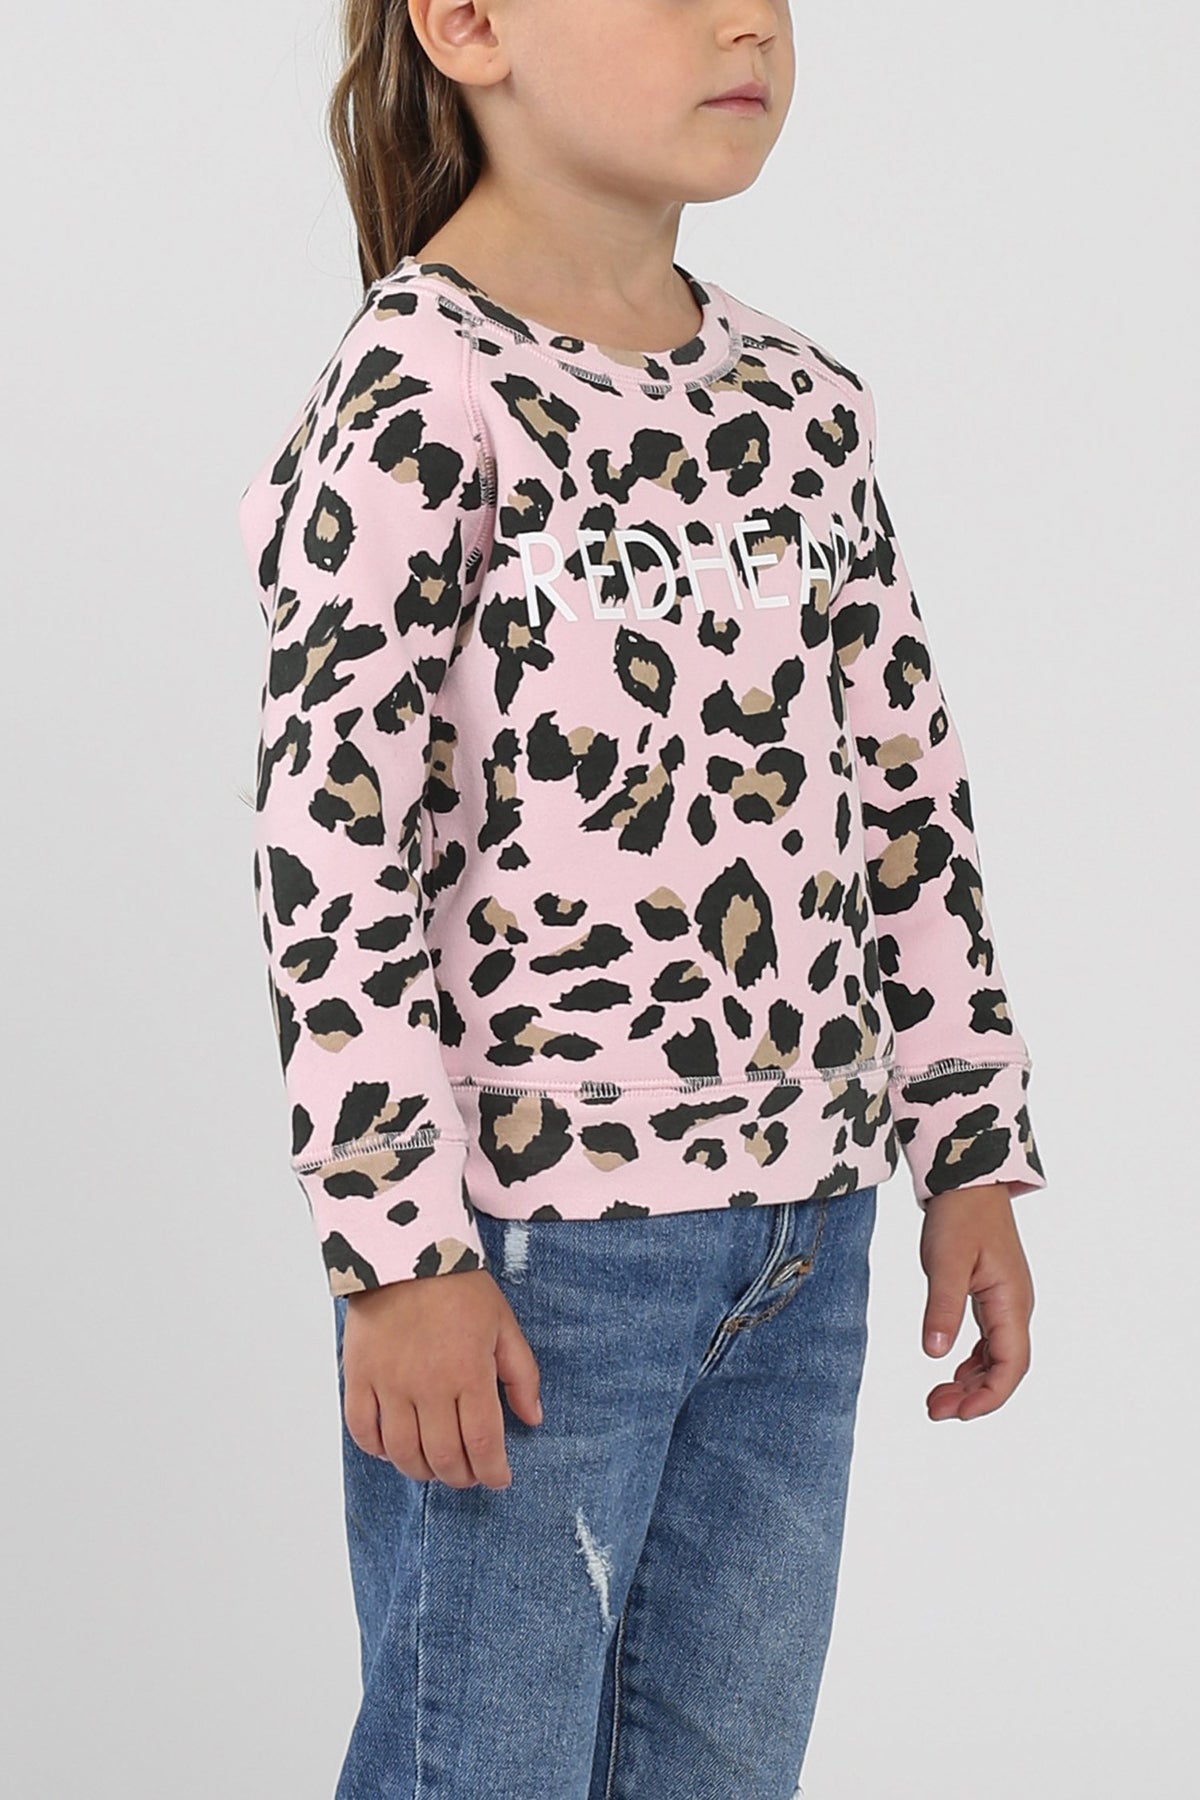 The "REDHEAD" Little Babes Crew Neck Sweatshirt | Pink Leopard